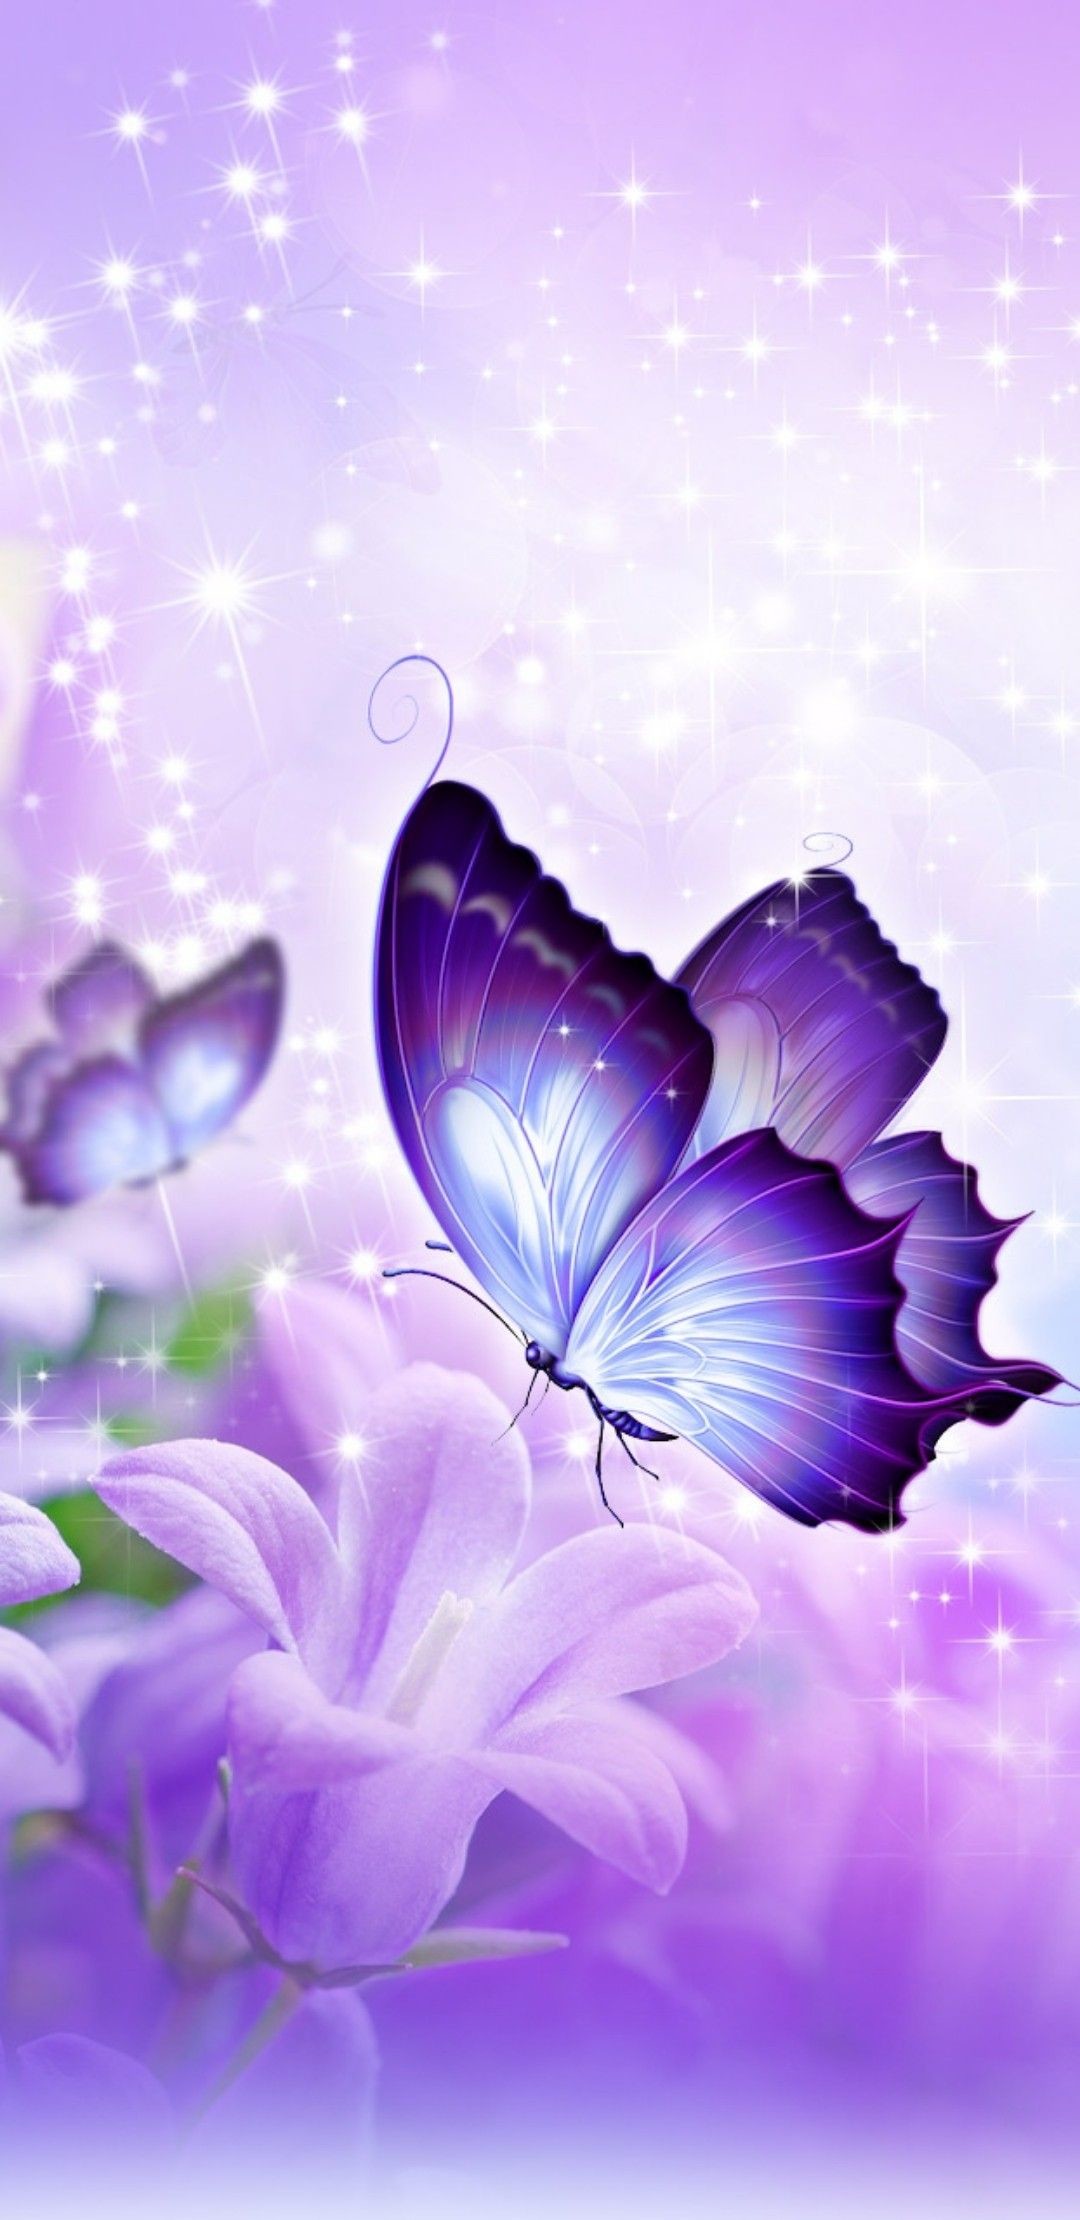 1080x2220 Linda mariposa morada | Lovely purple butterfly